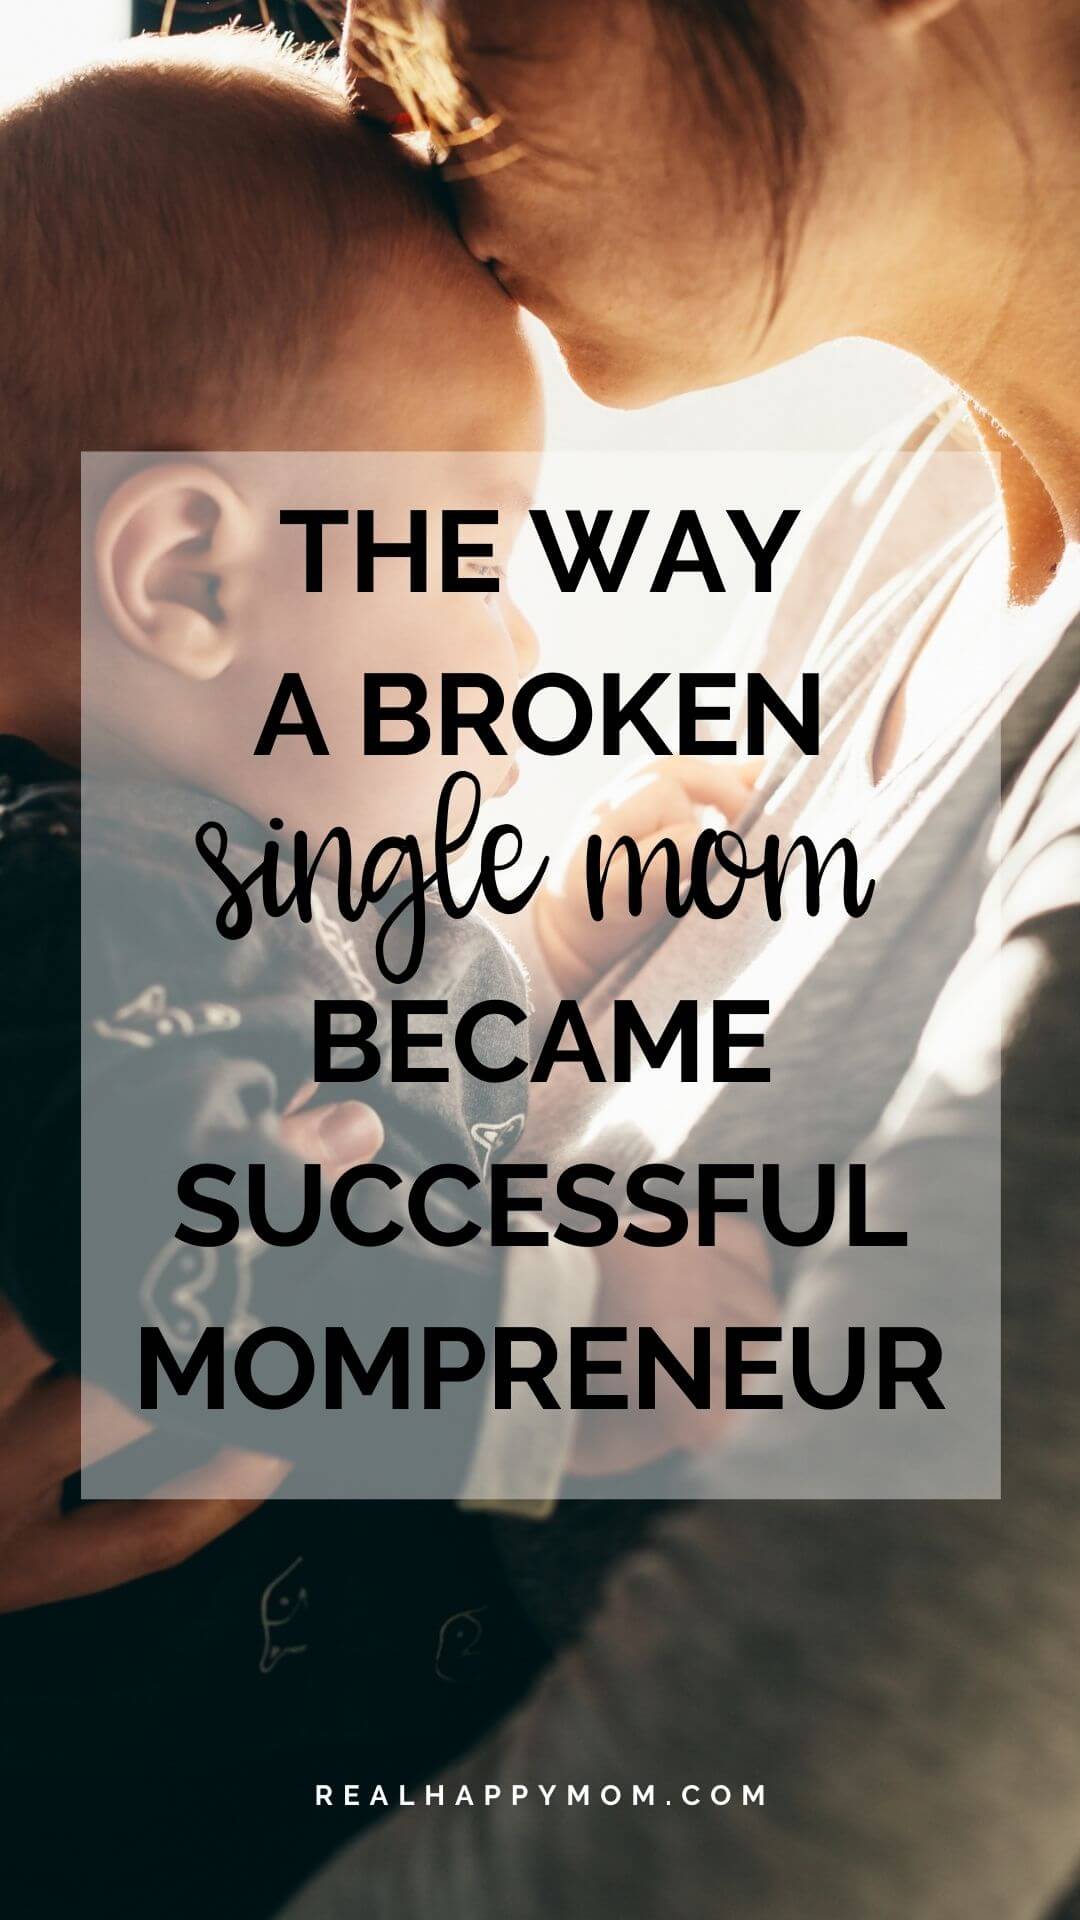 The Way a Broken Single Mom Became Successful Mompreneur